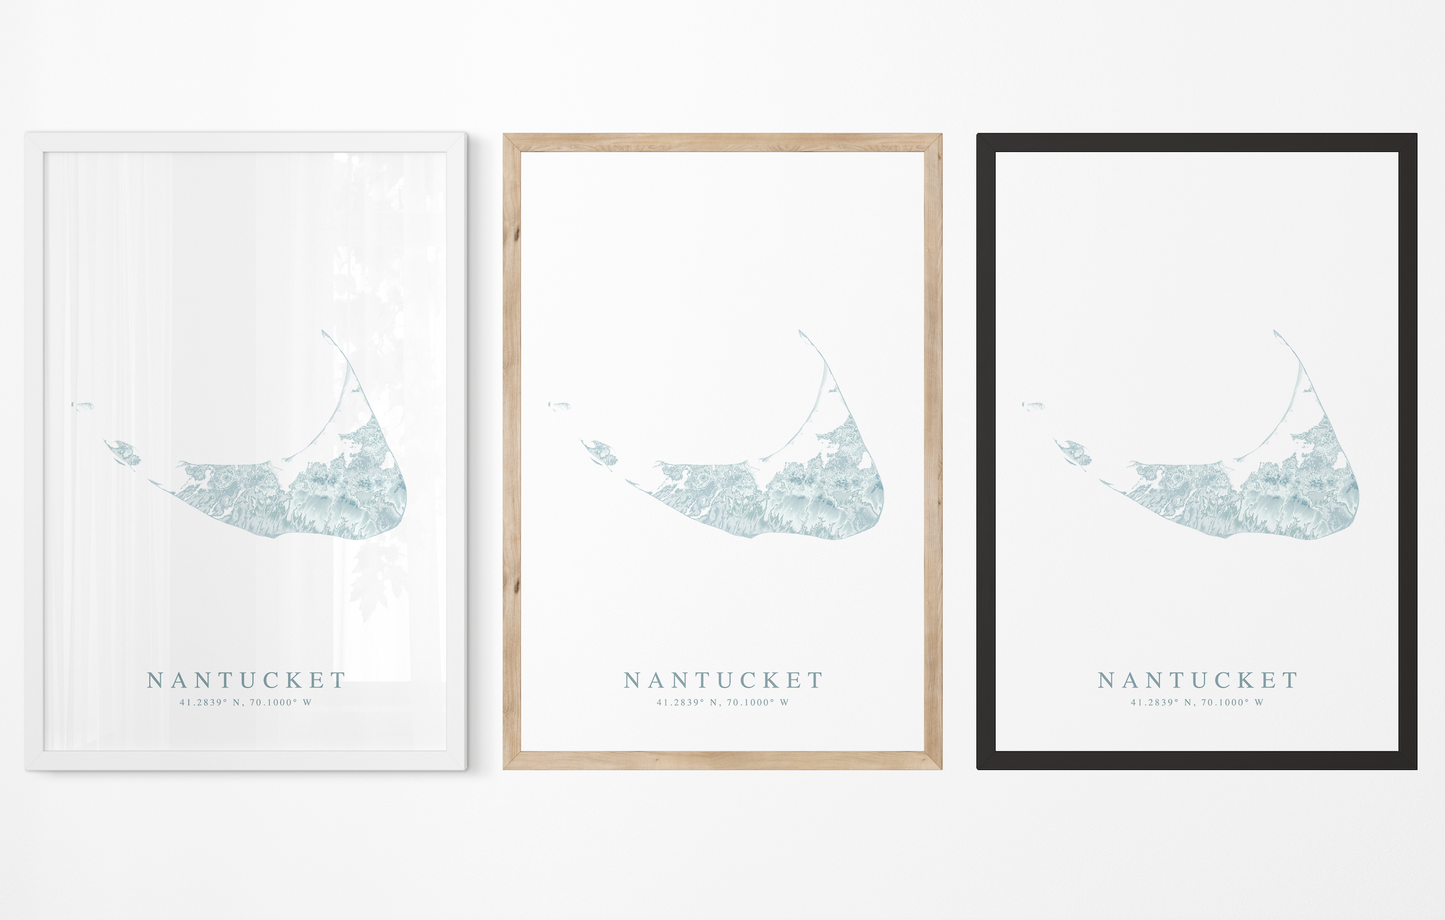 Nantucket Map Print